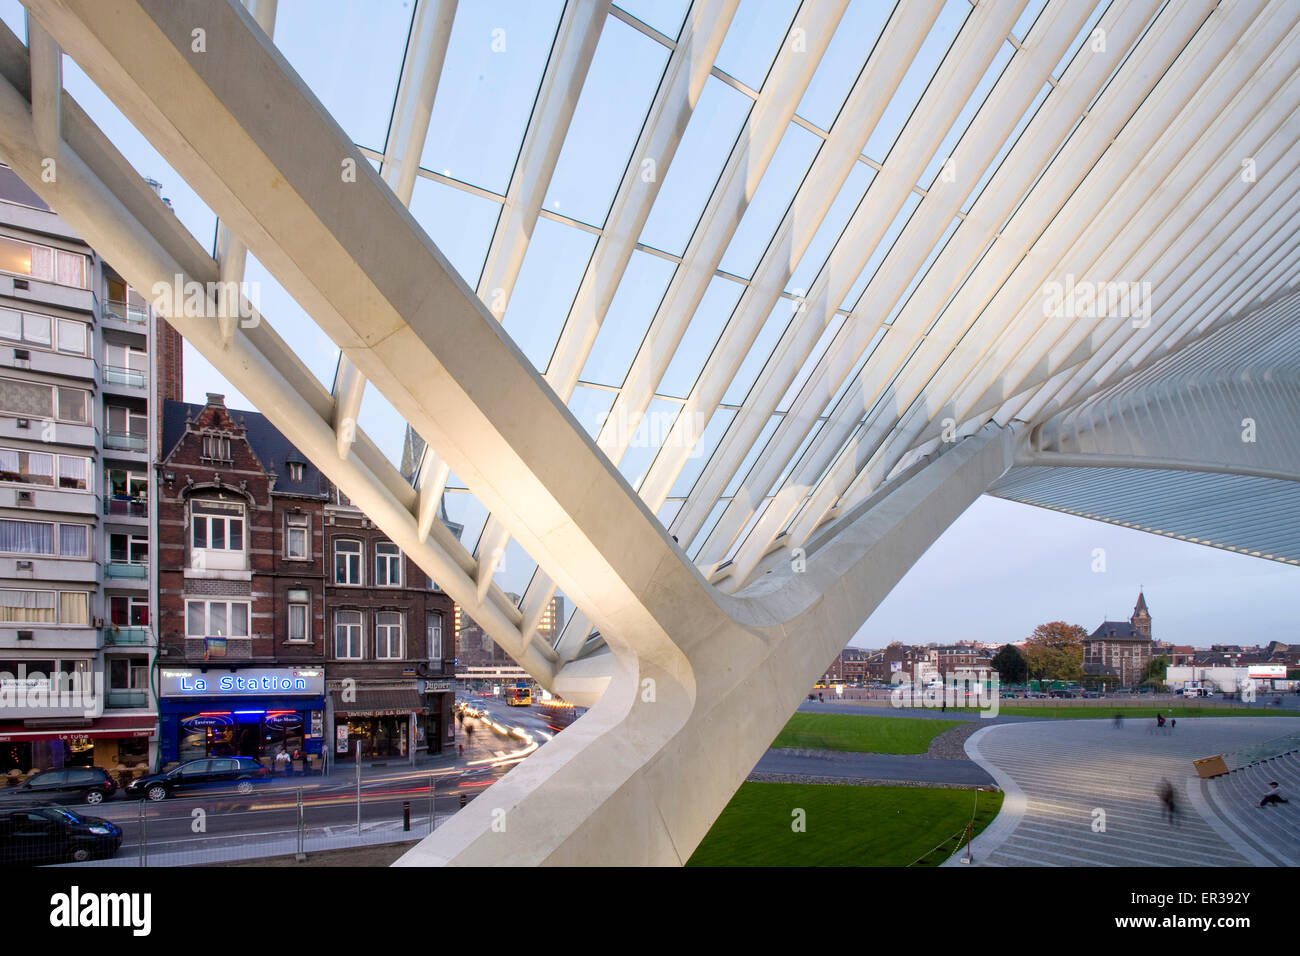 Europe, Belgium, Liege, roof structure of the railway station Liege-Guillemins, architect Santiago Calatrava  Europa, Belgien, L Stock Photo